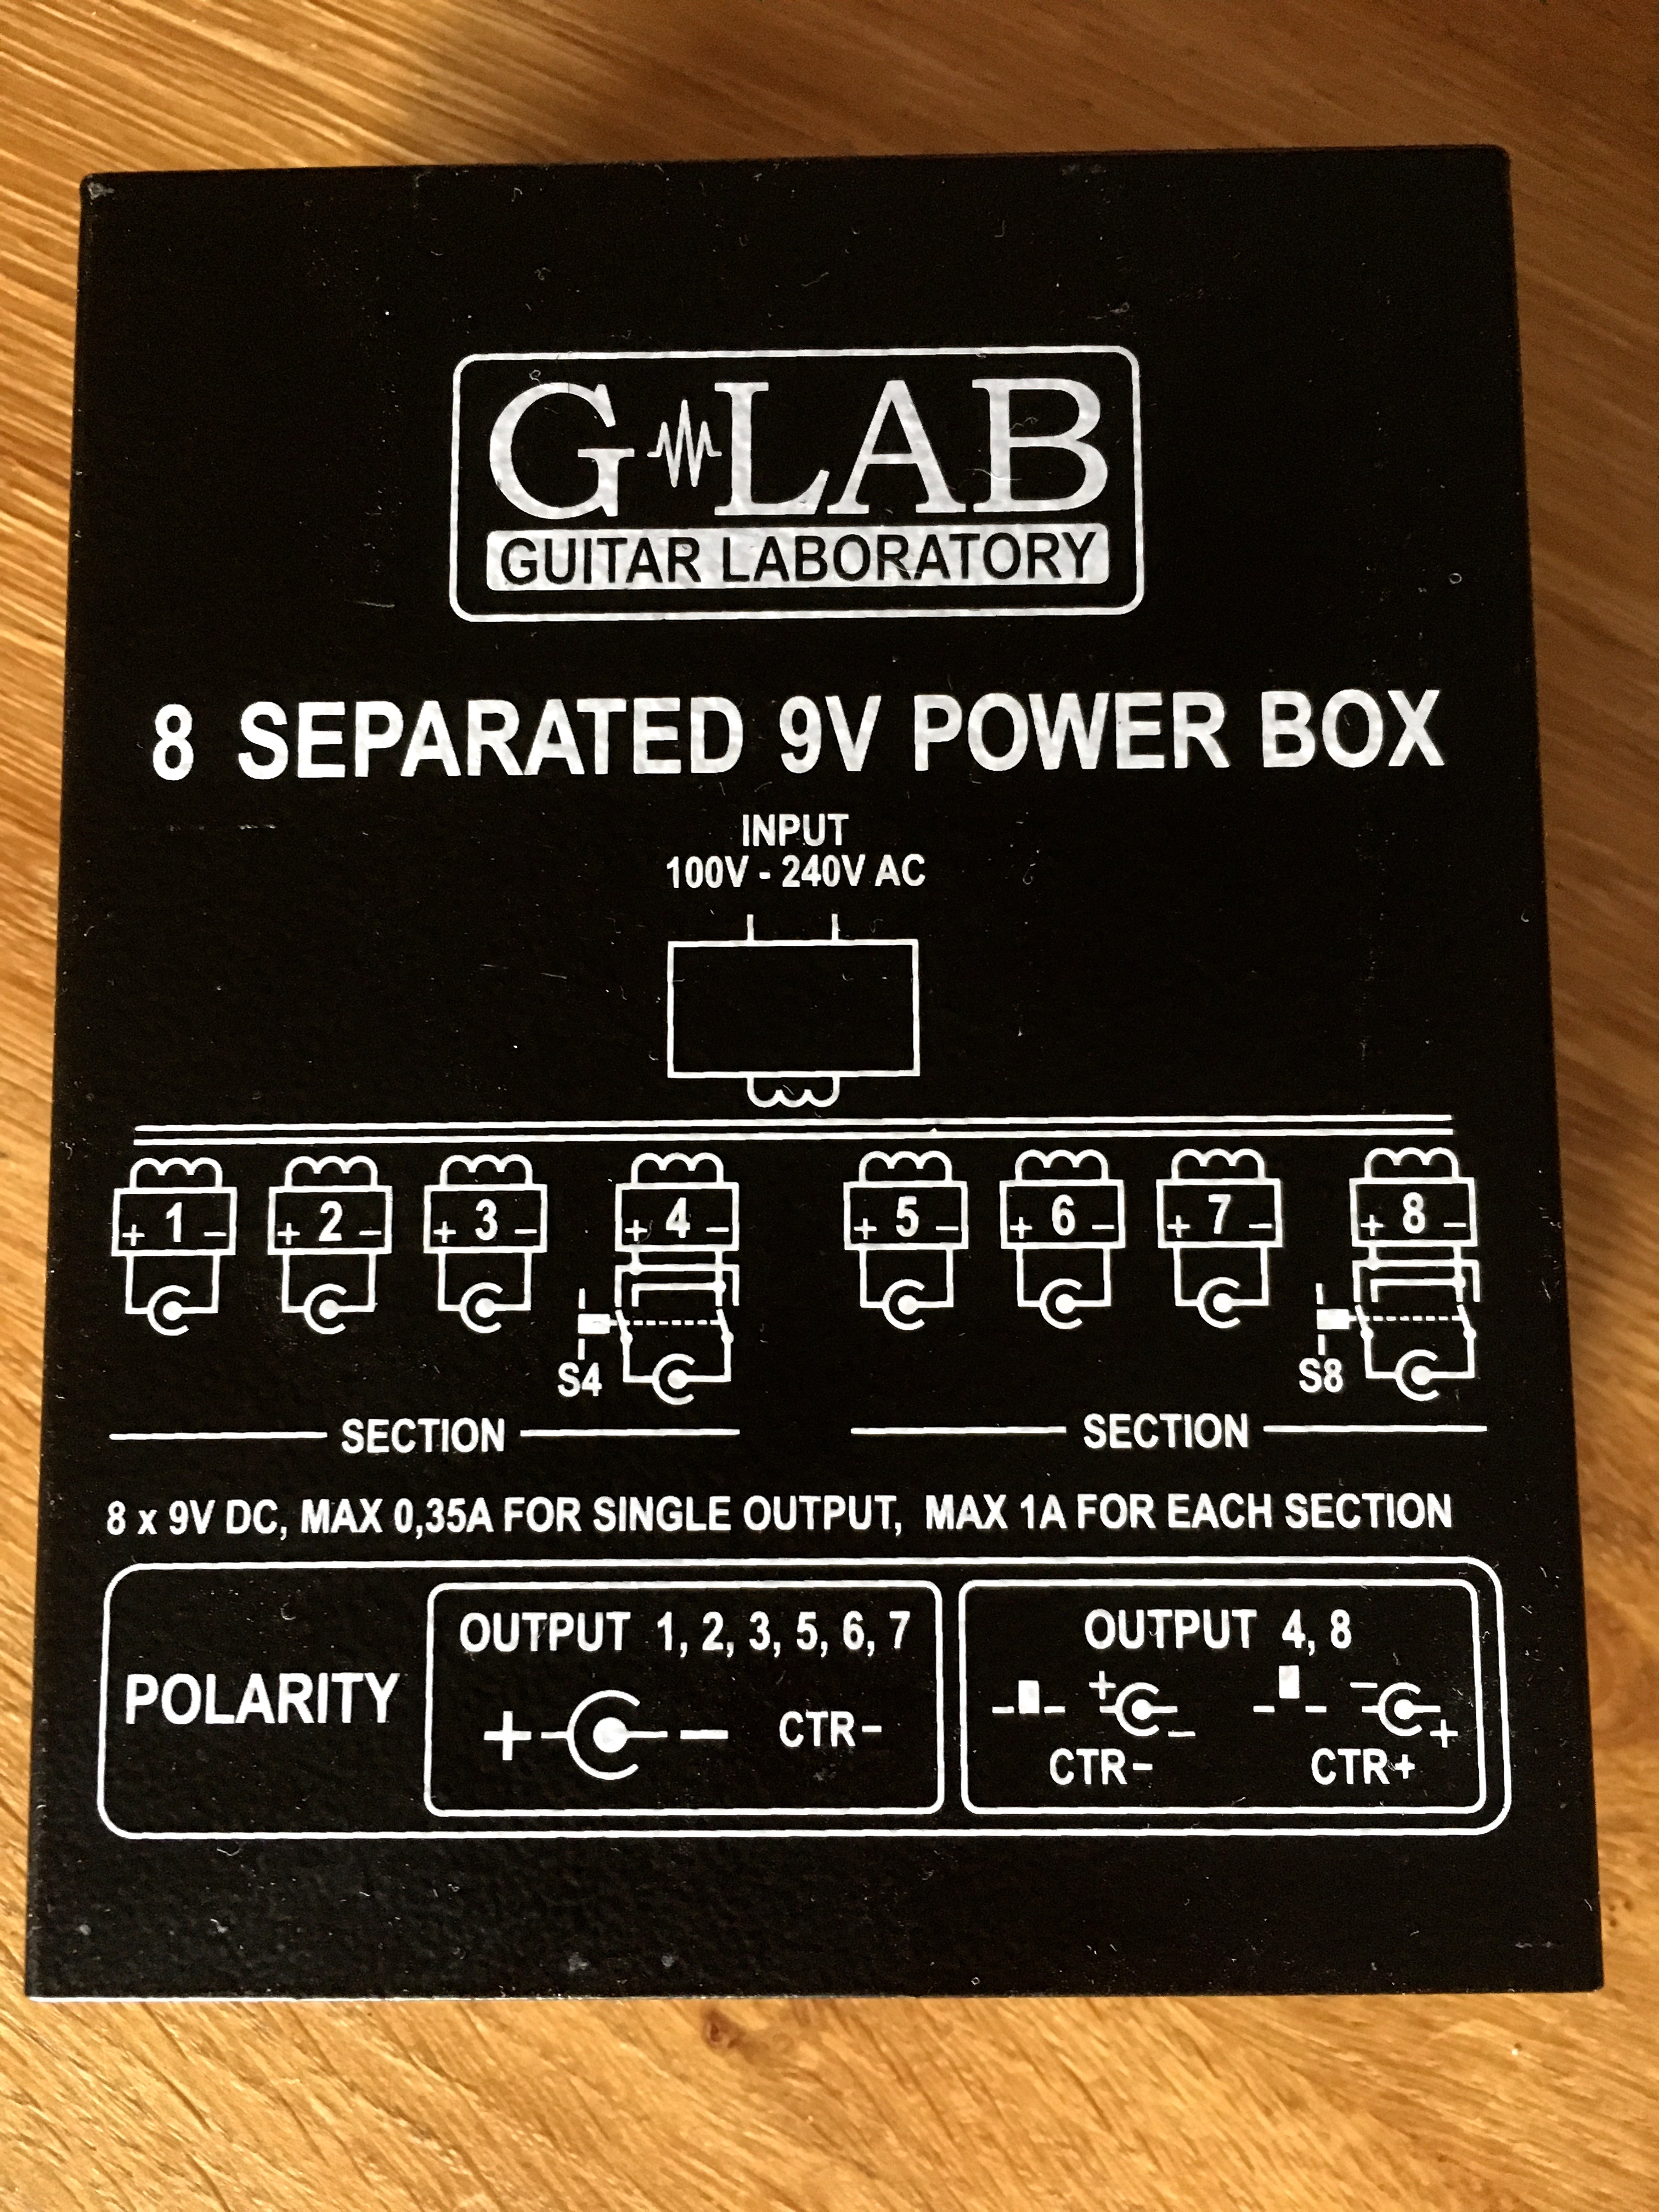 PB-1 Power Box - G-Lab PB-1 Power Box - Audiofanzine